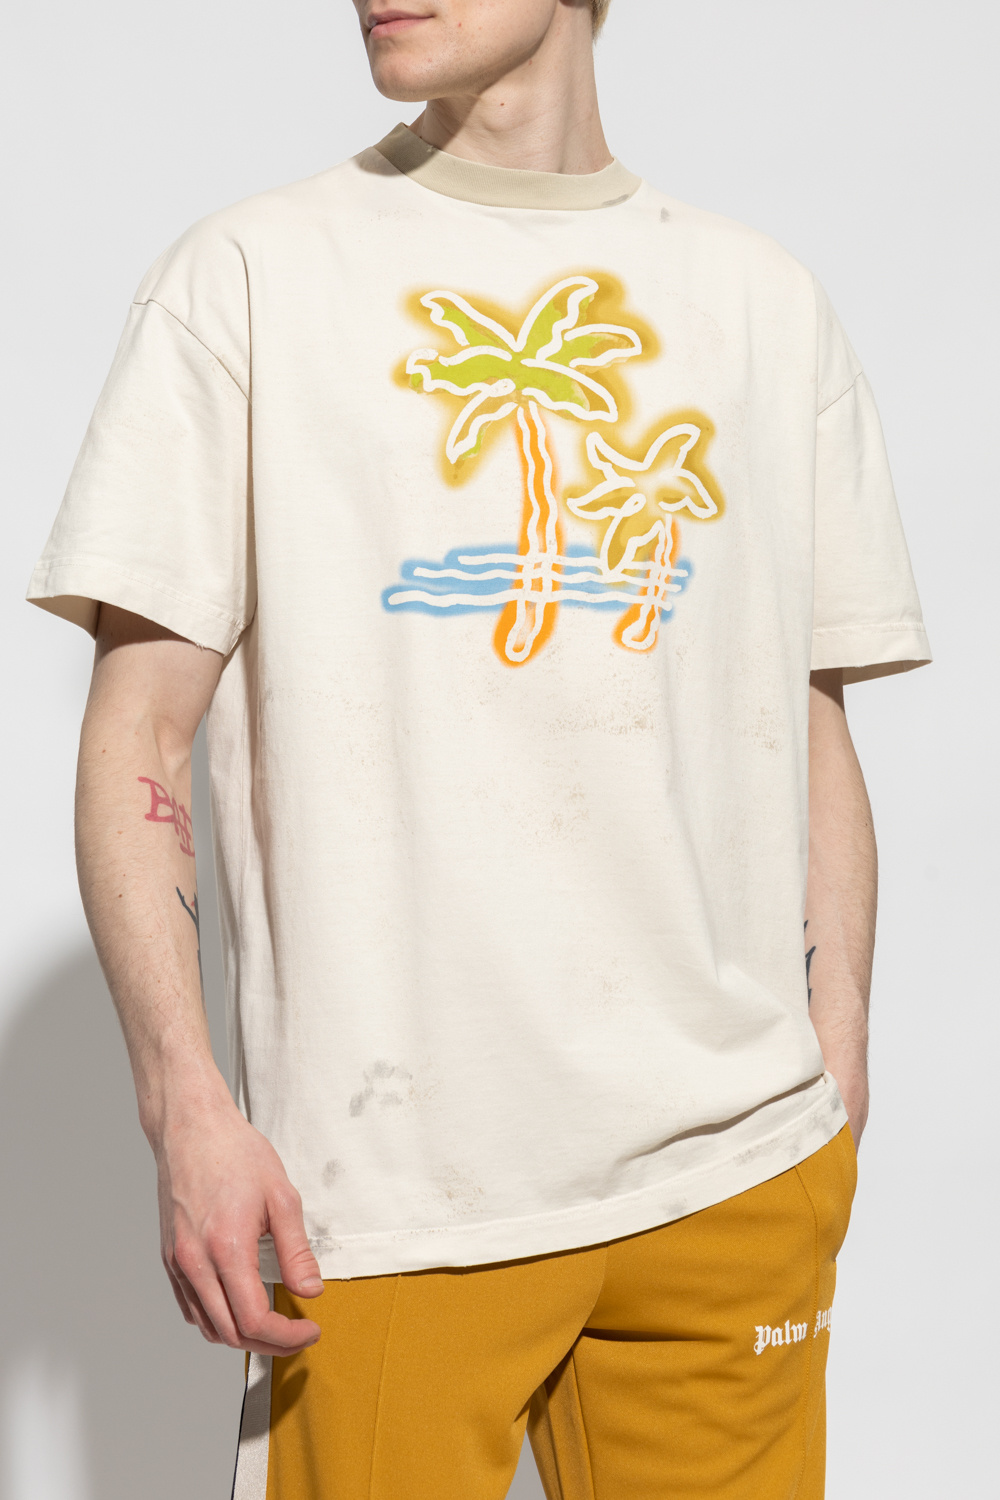 White T-shirt with logo Palm Angels - Vitkac TW